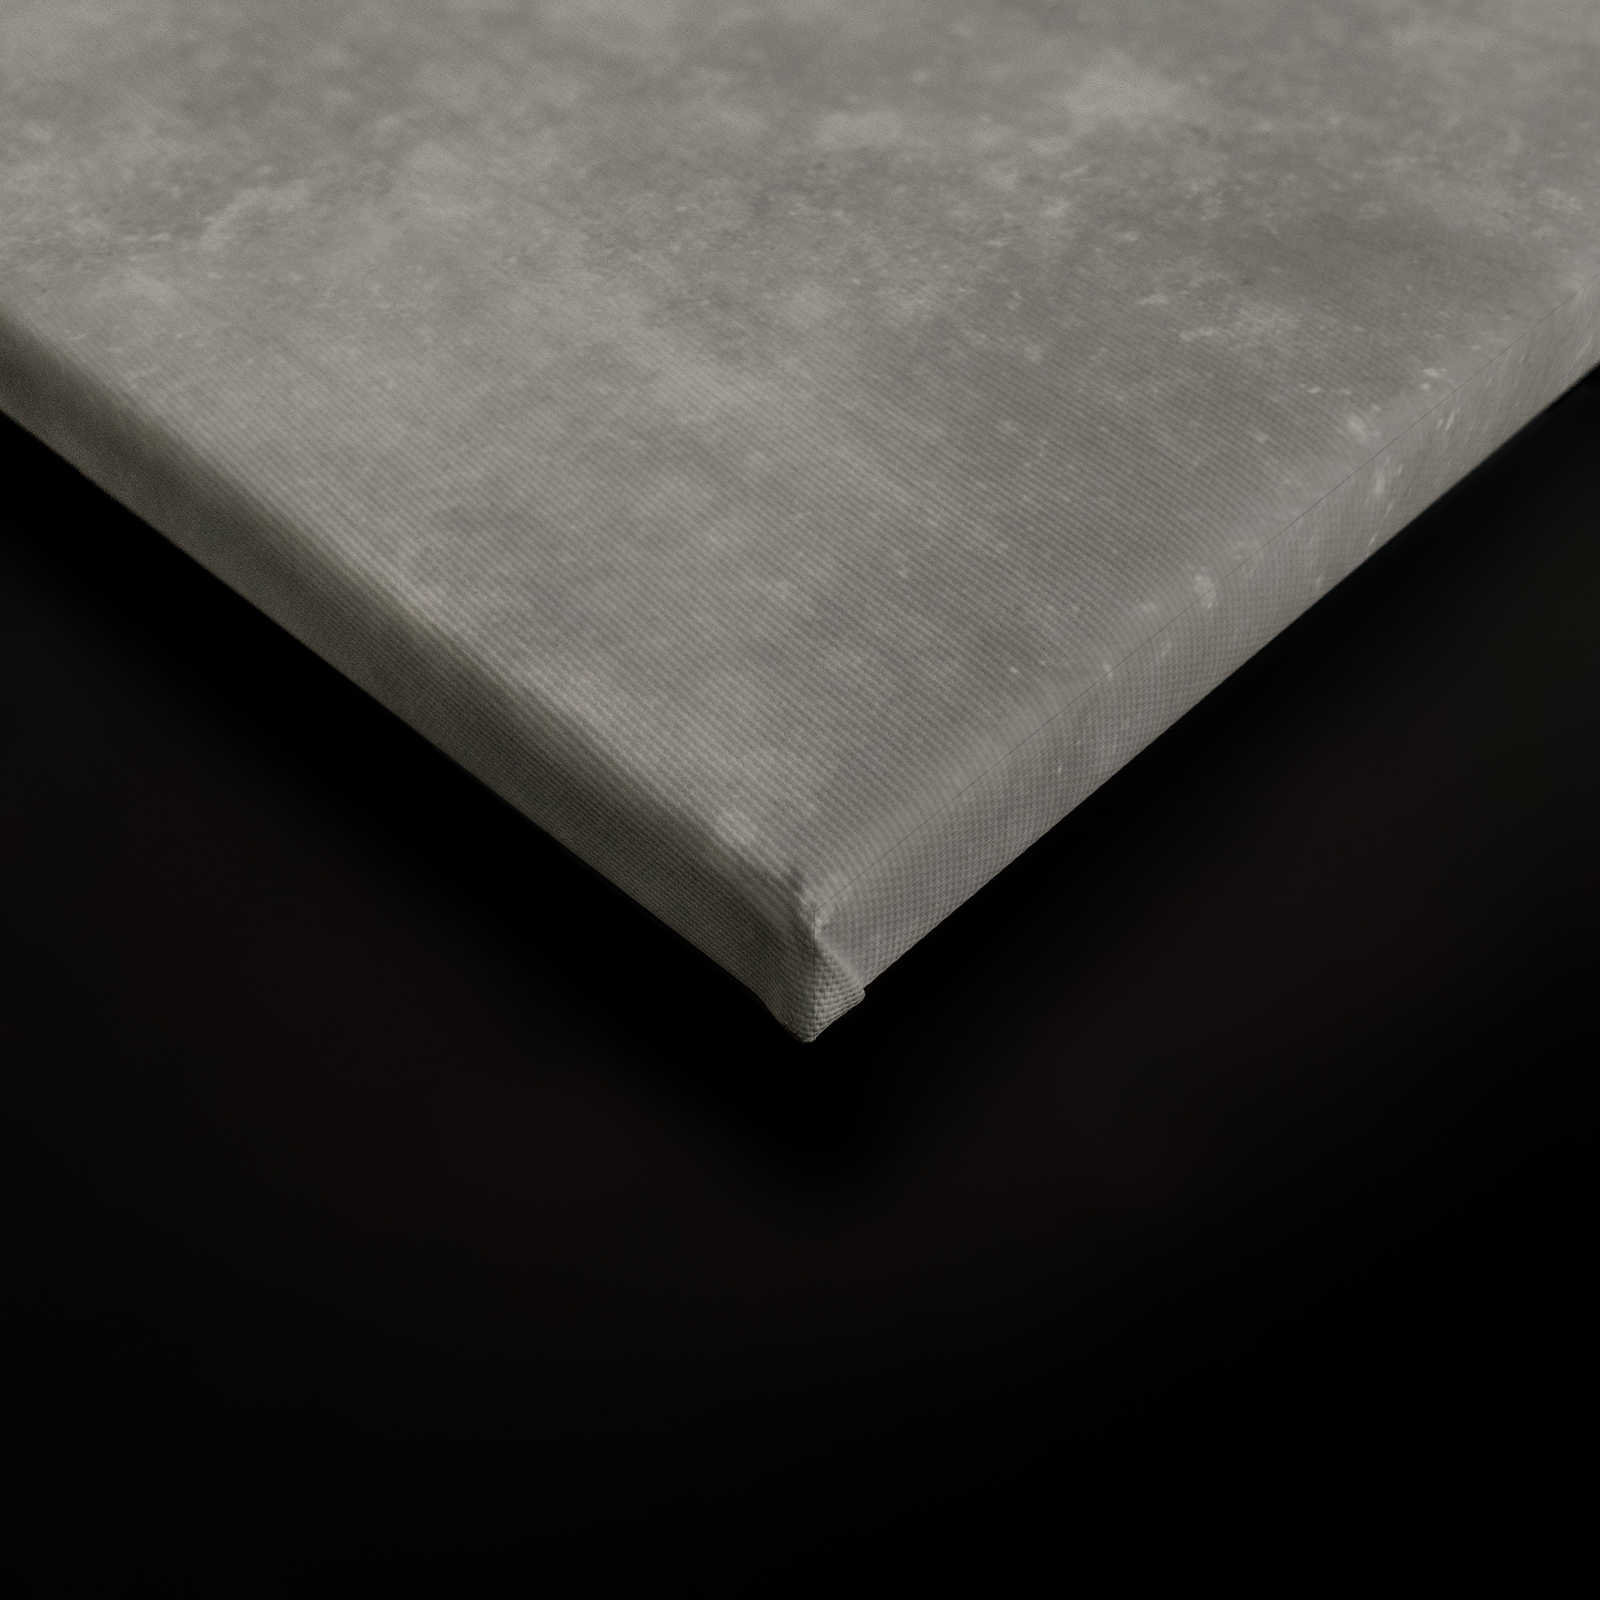             Concrete look canvas picture with stripes - 0.90 m x 0.60 m
        